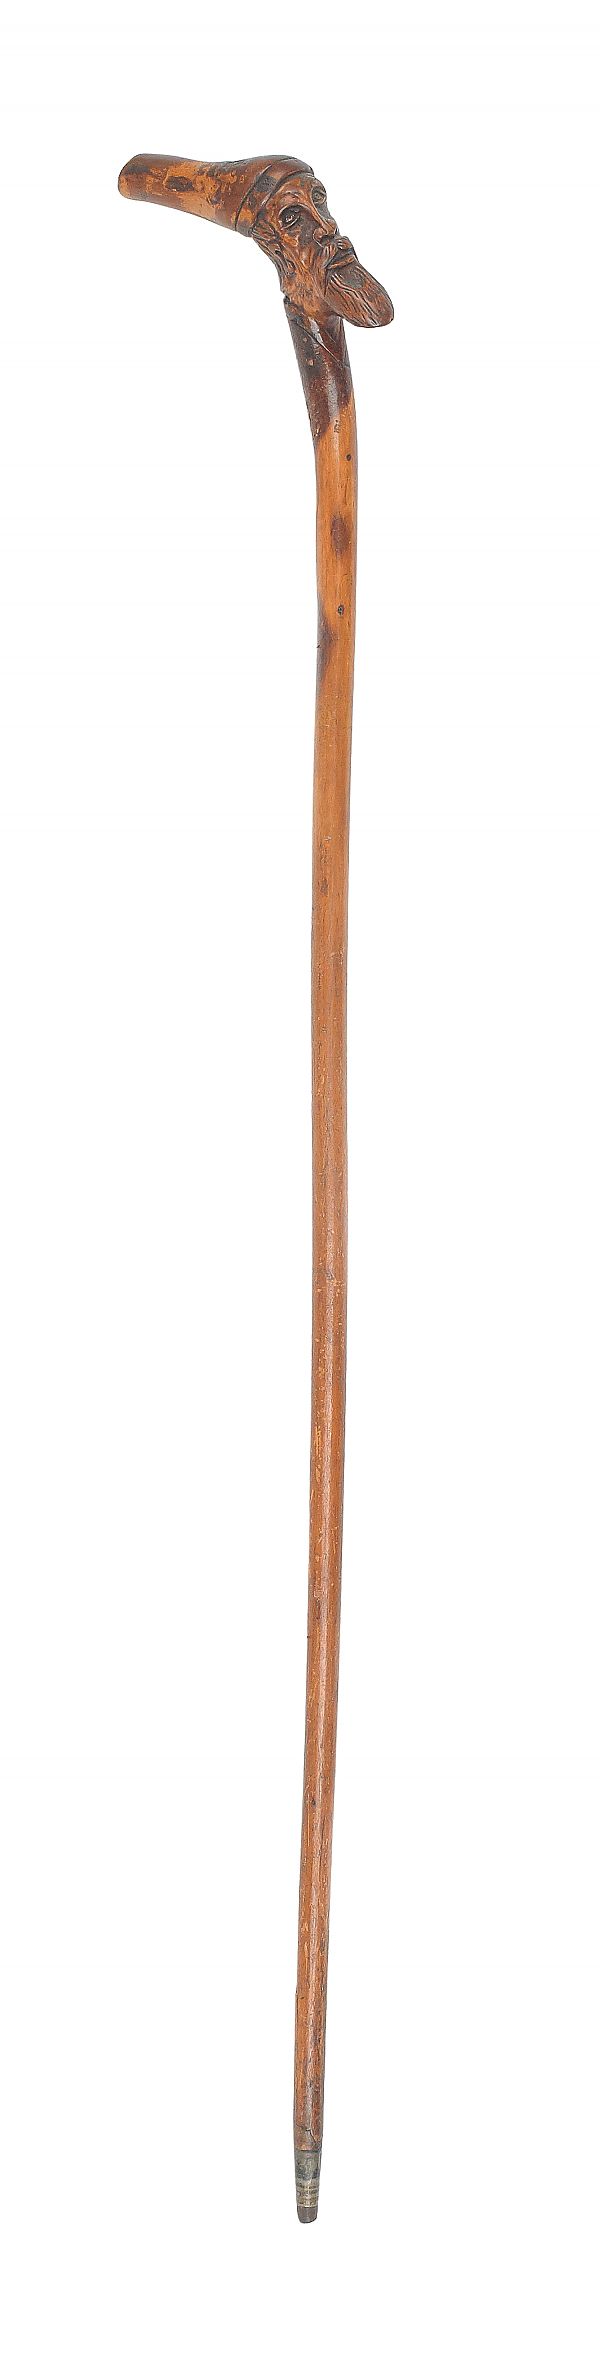 Pennsylvania carved walking stick 1750f0